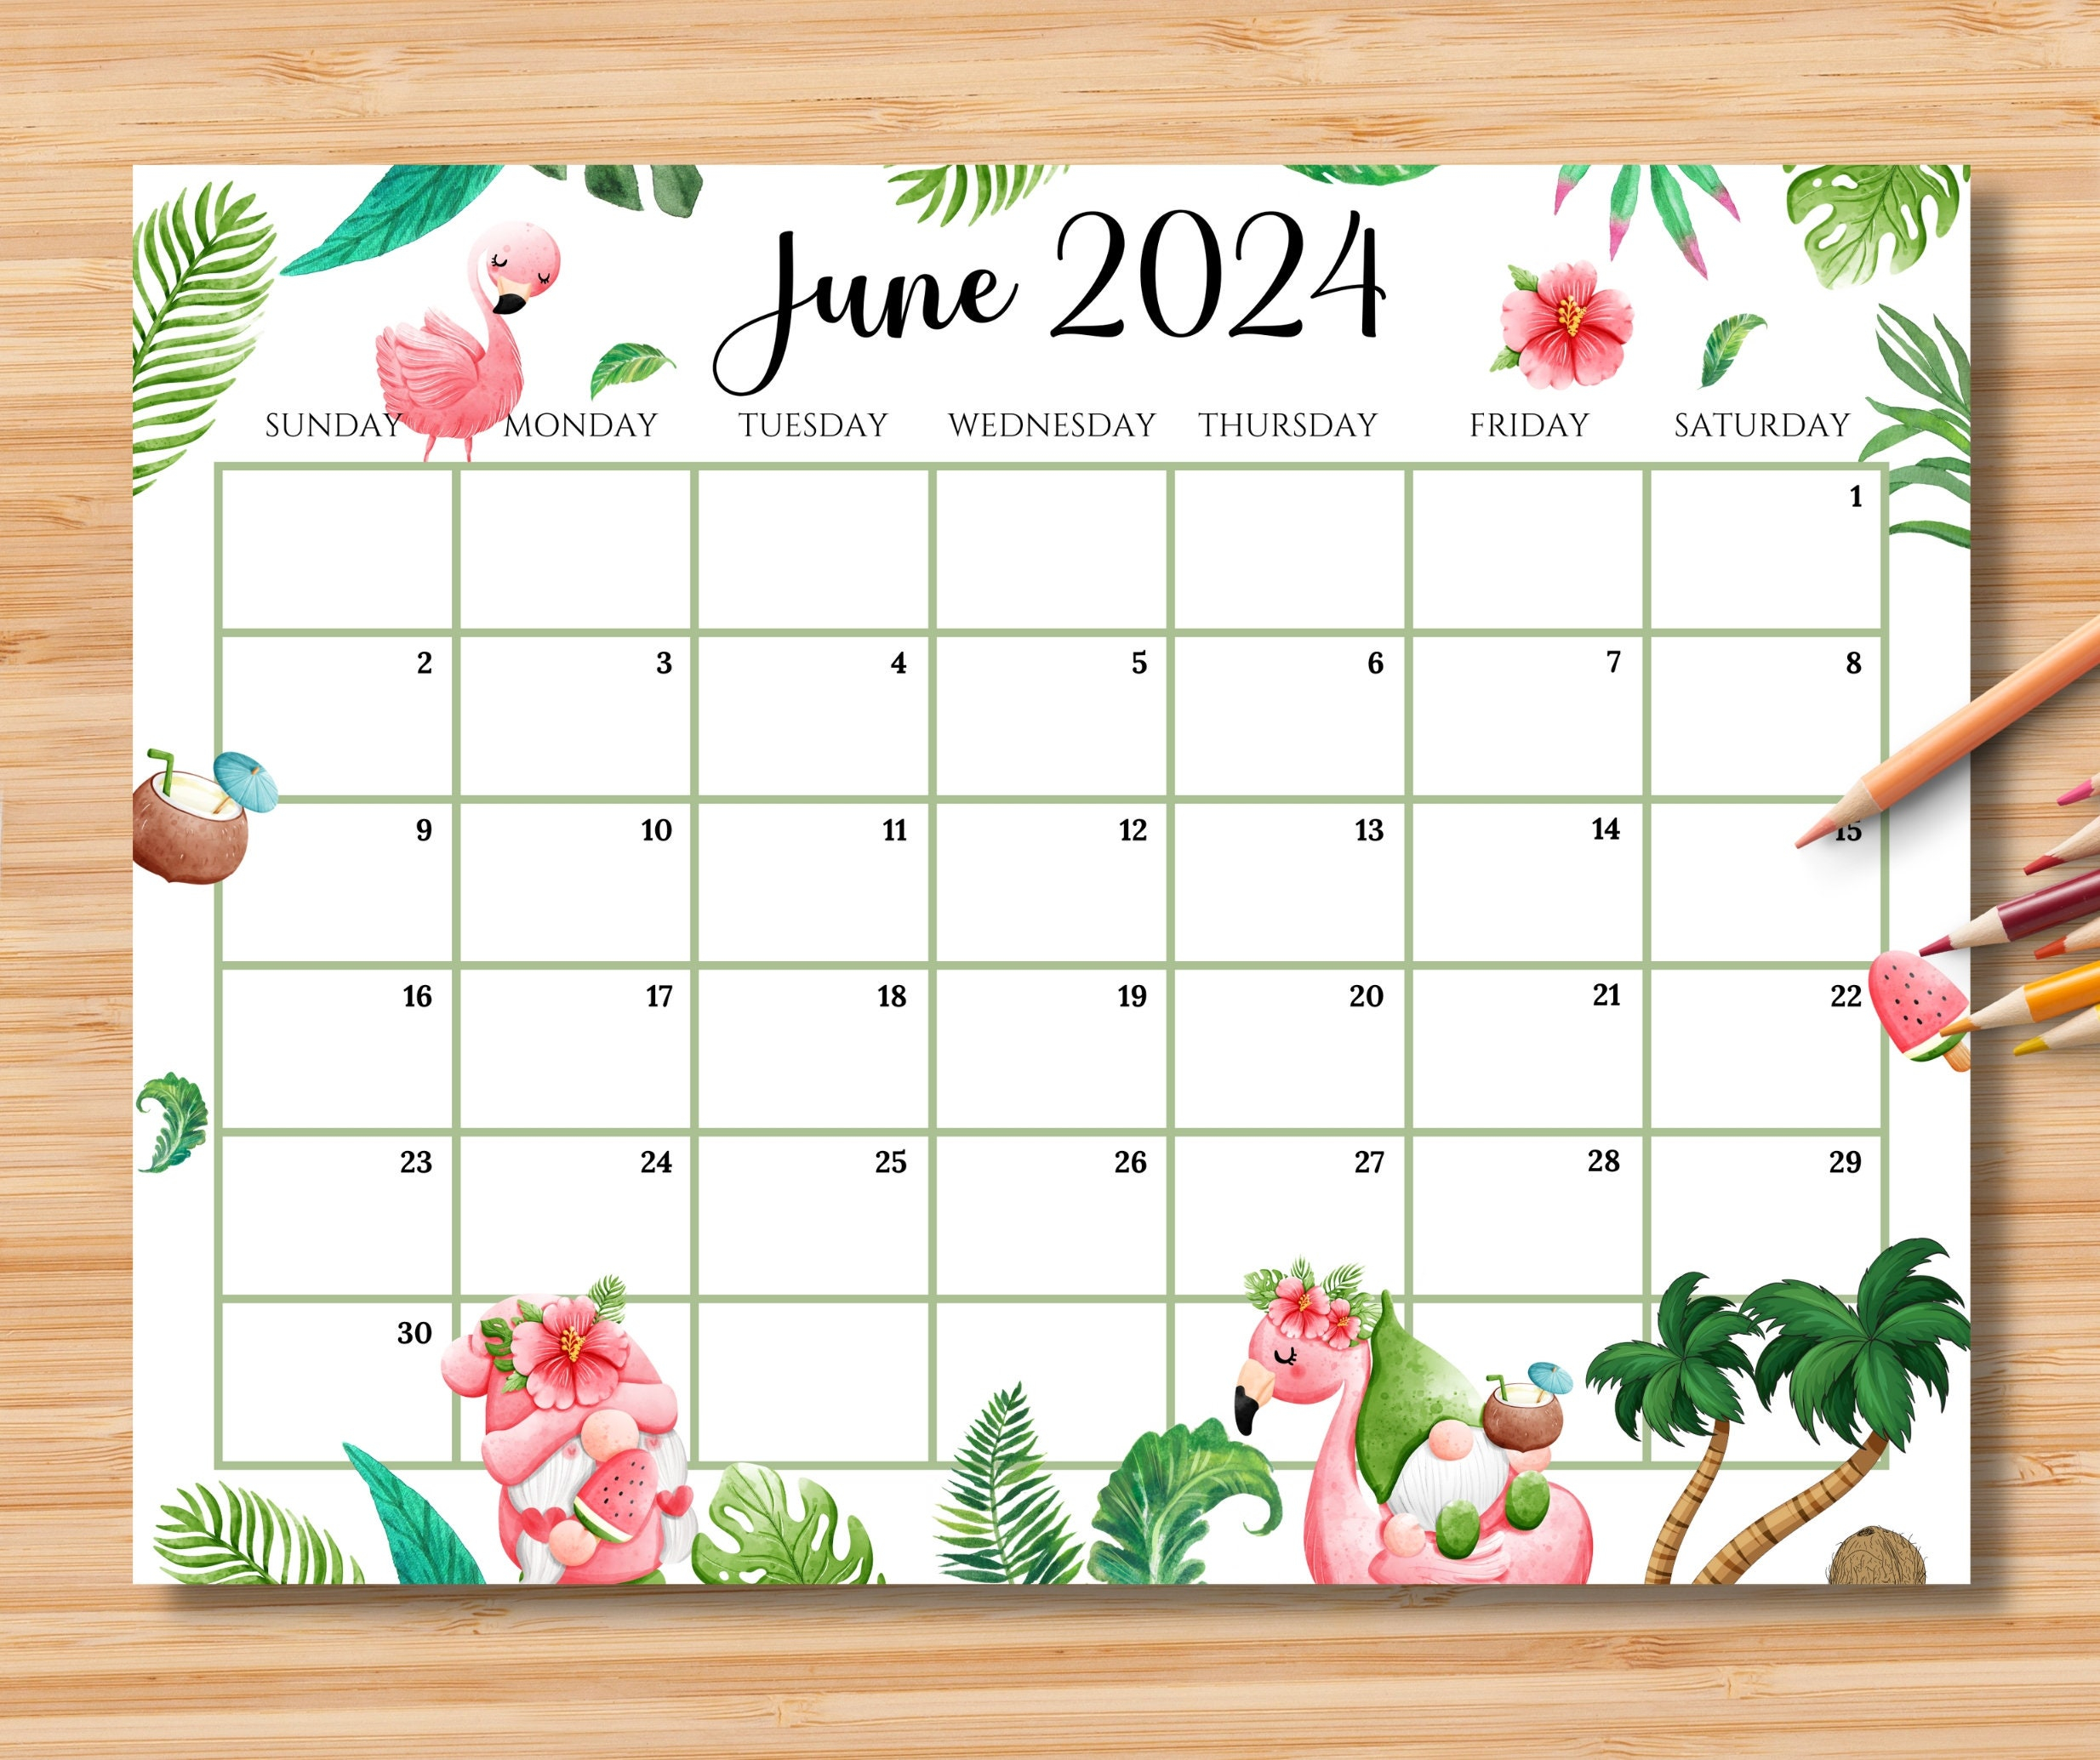 Editable June 2024 Calendar Joyful Summer With Cute Gnomes for Cute June 2024 Calendar Printable